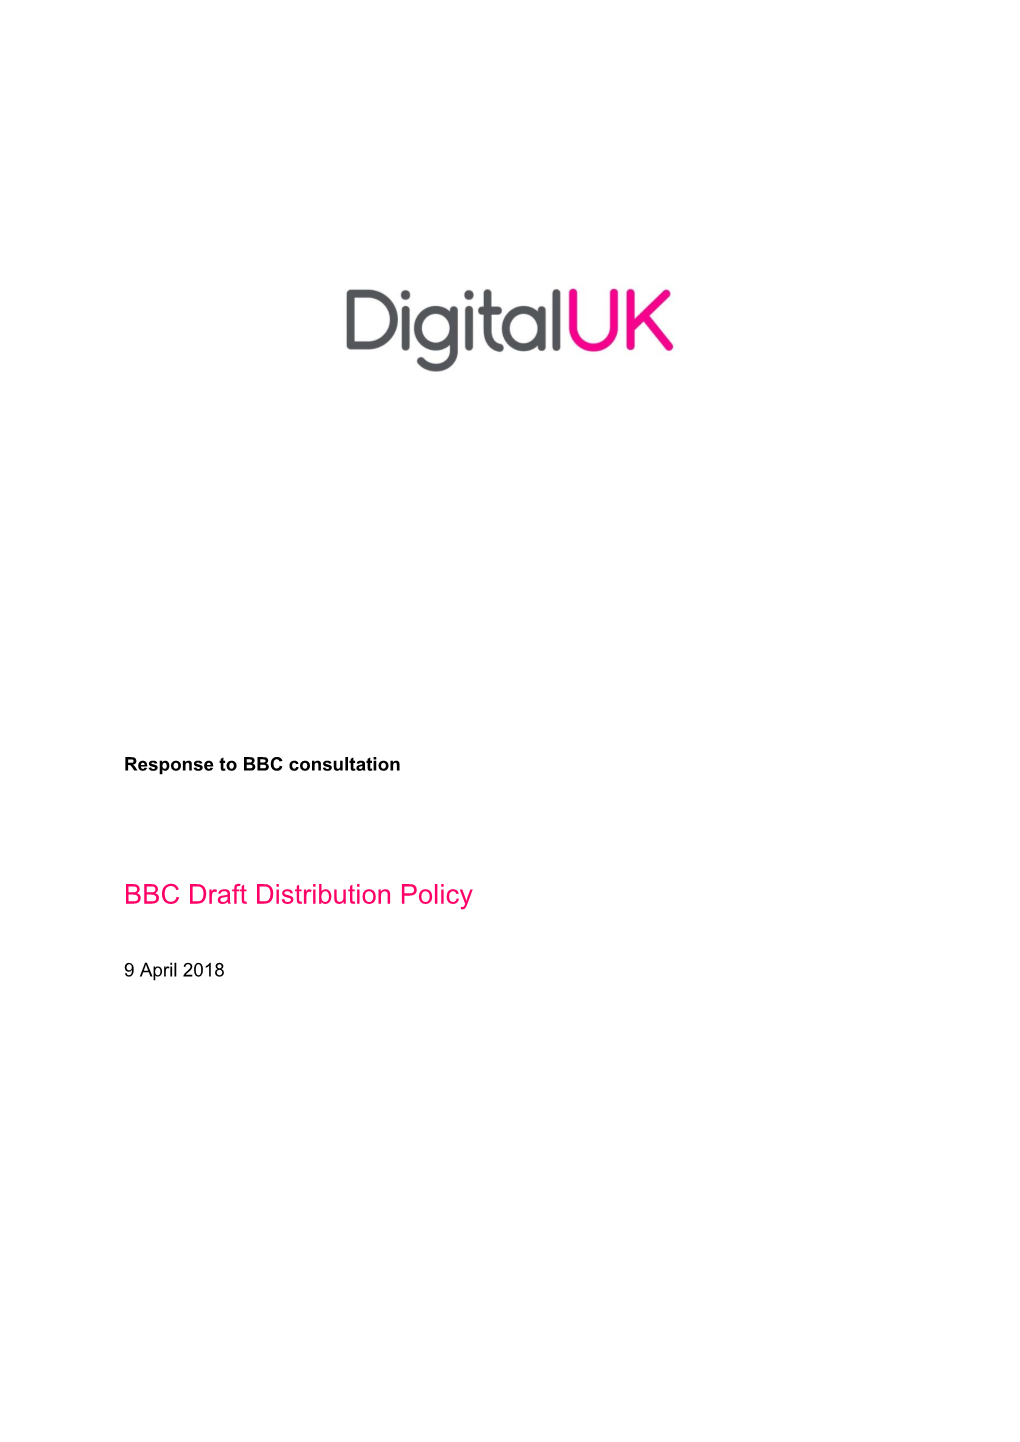 Digital UK Response to BBC Draft Distribution Policy Consultation 9 April 2018